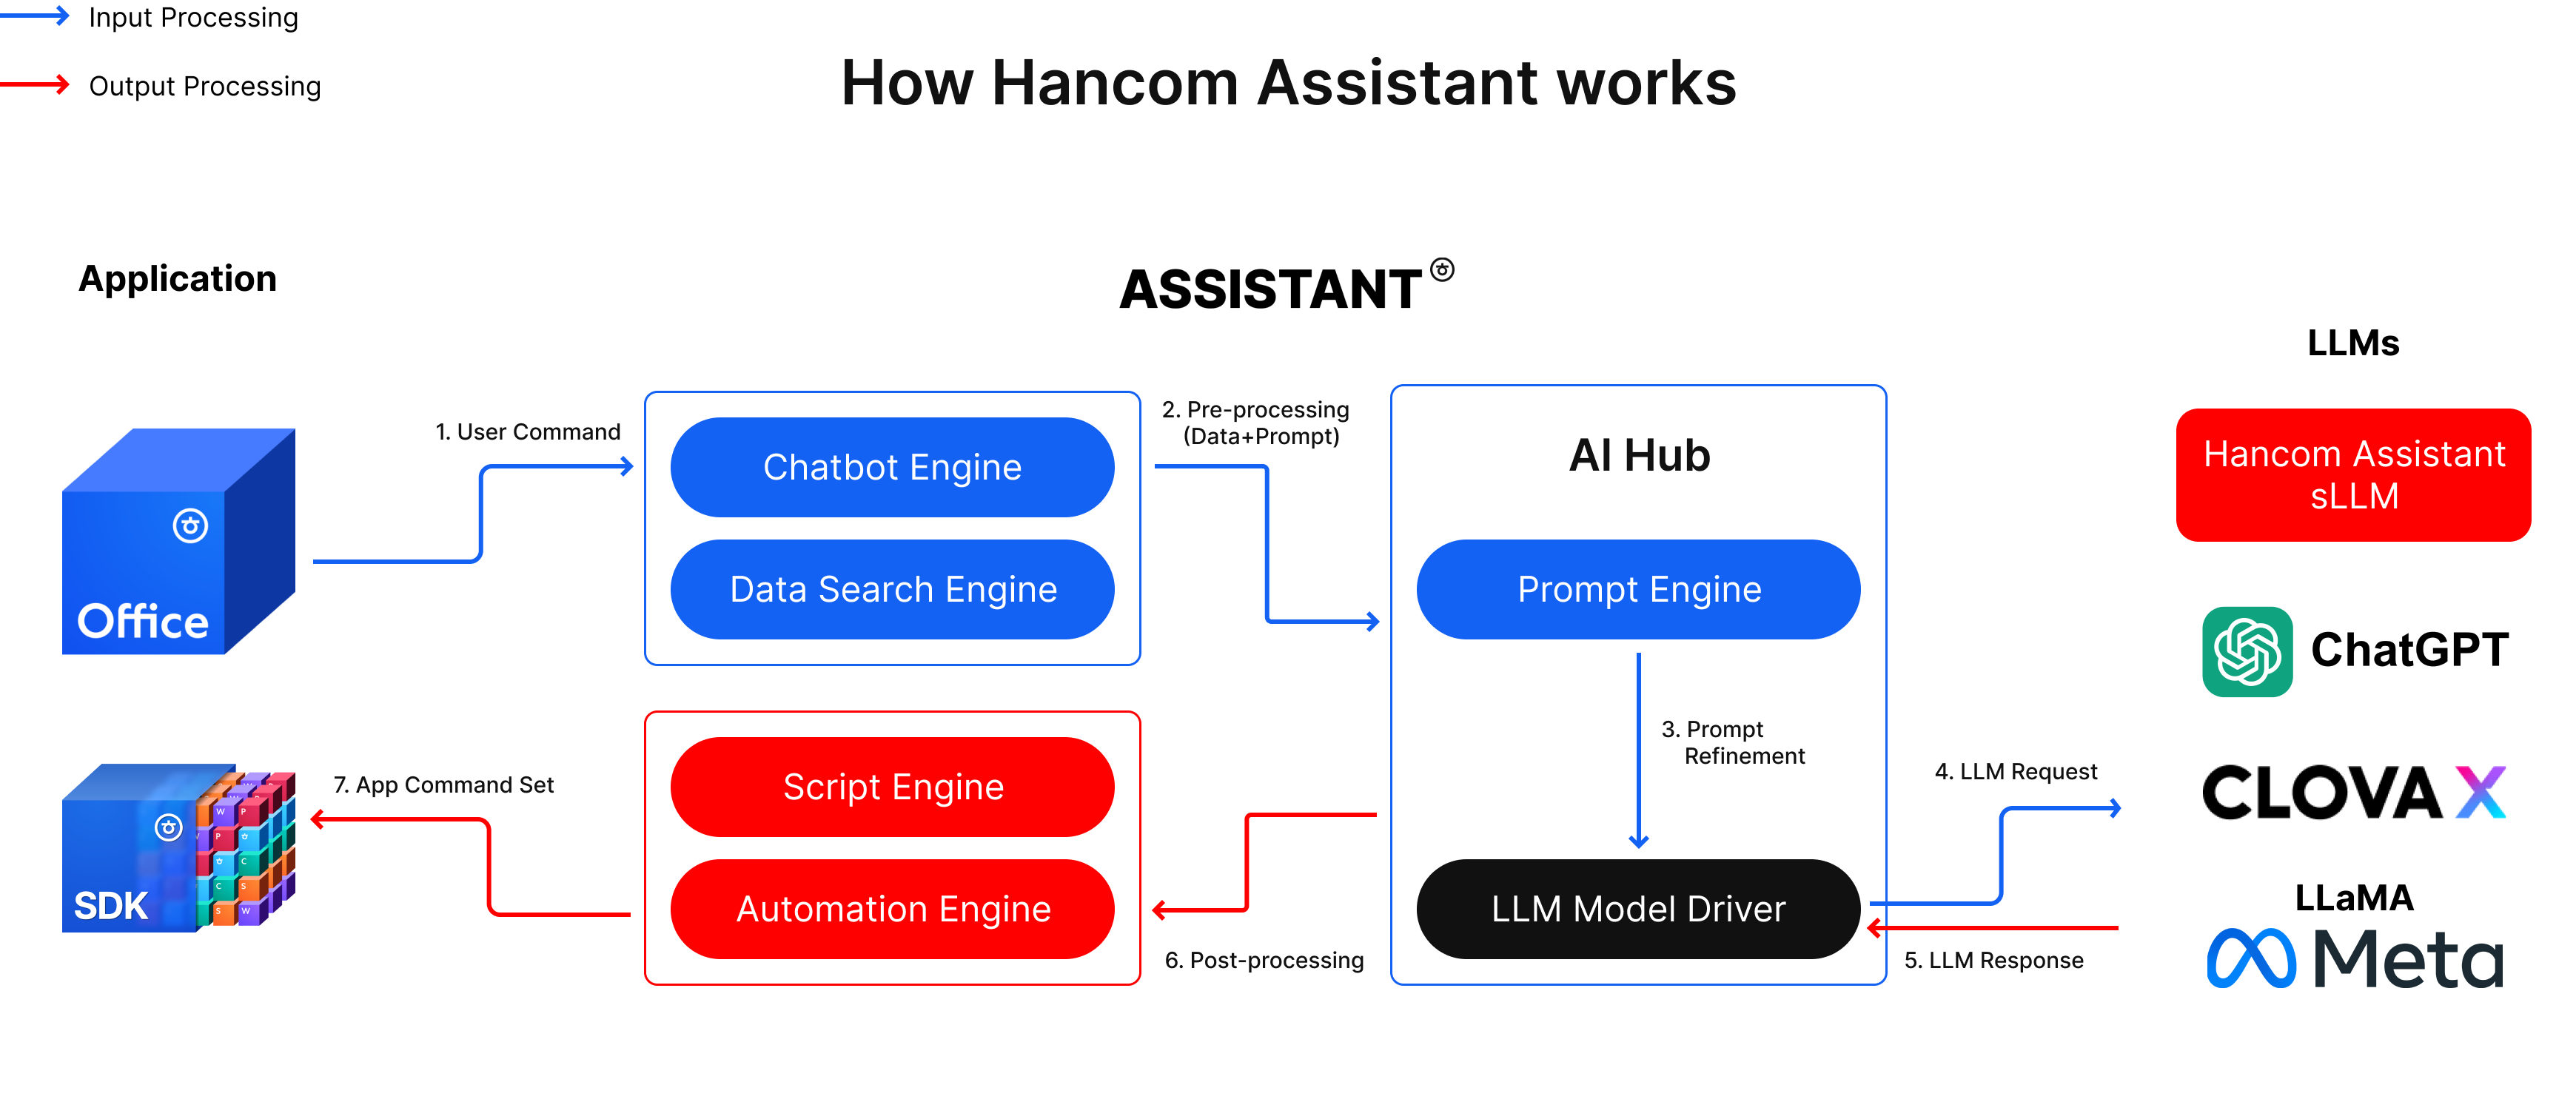 How Hancom Assistant works